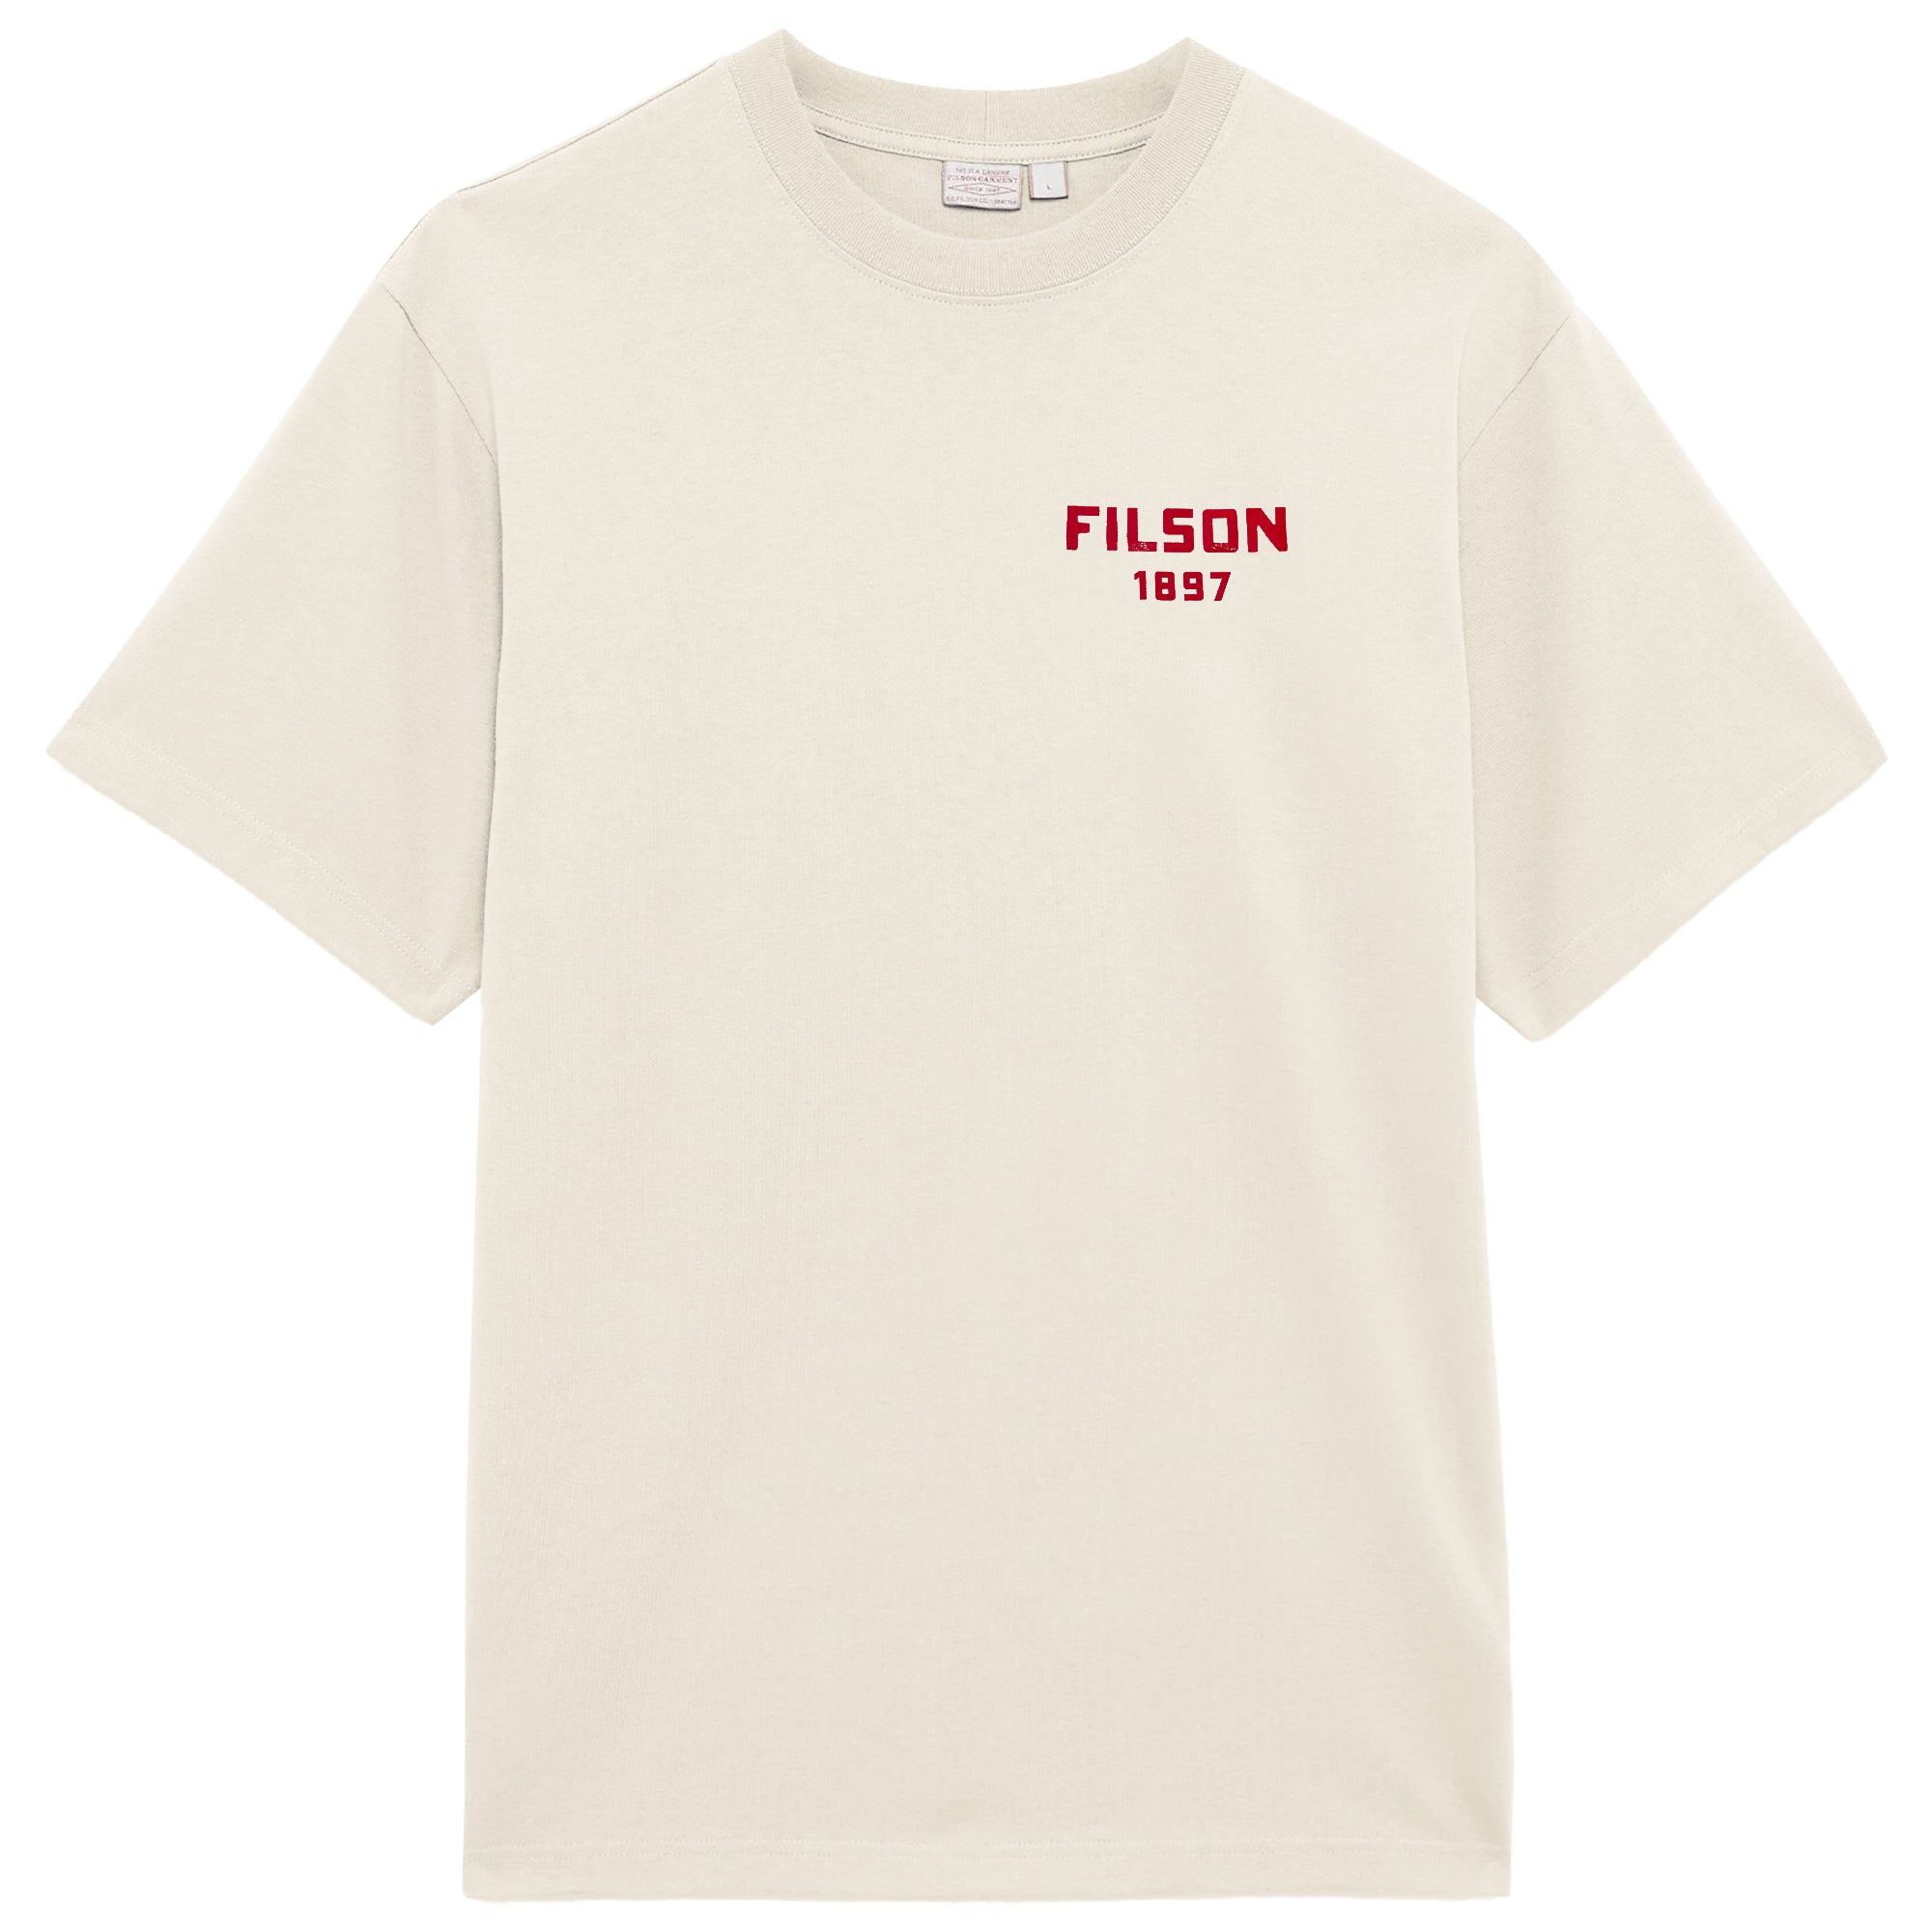 Filson Frontier Graphic T-Shirt - Silver Birch/Savy Red